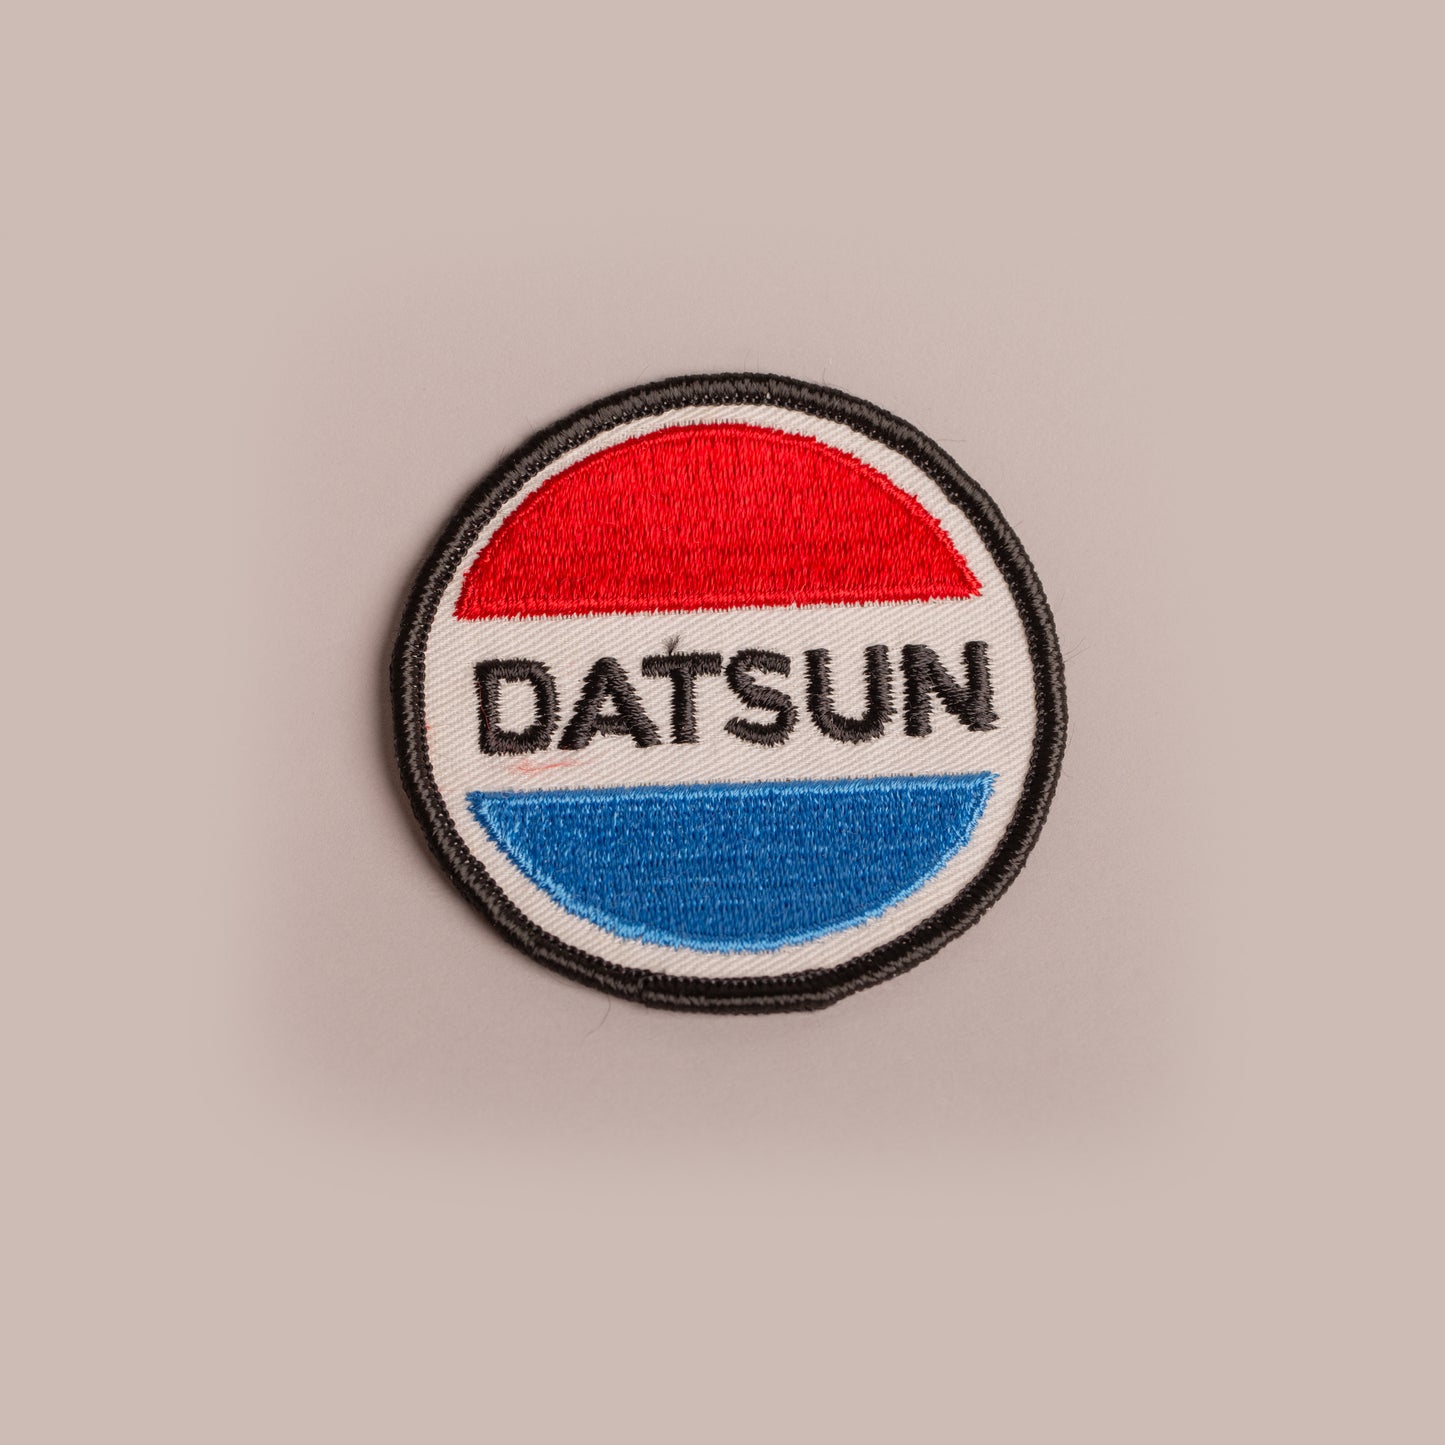 Vintage Patch - Datsun